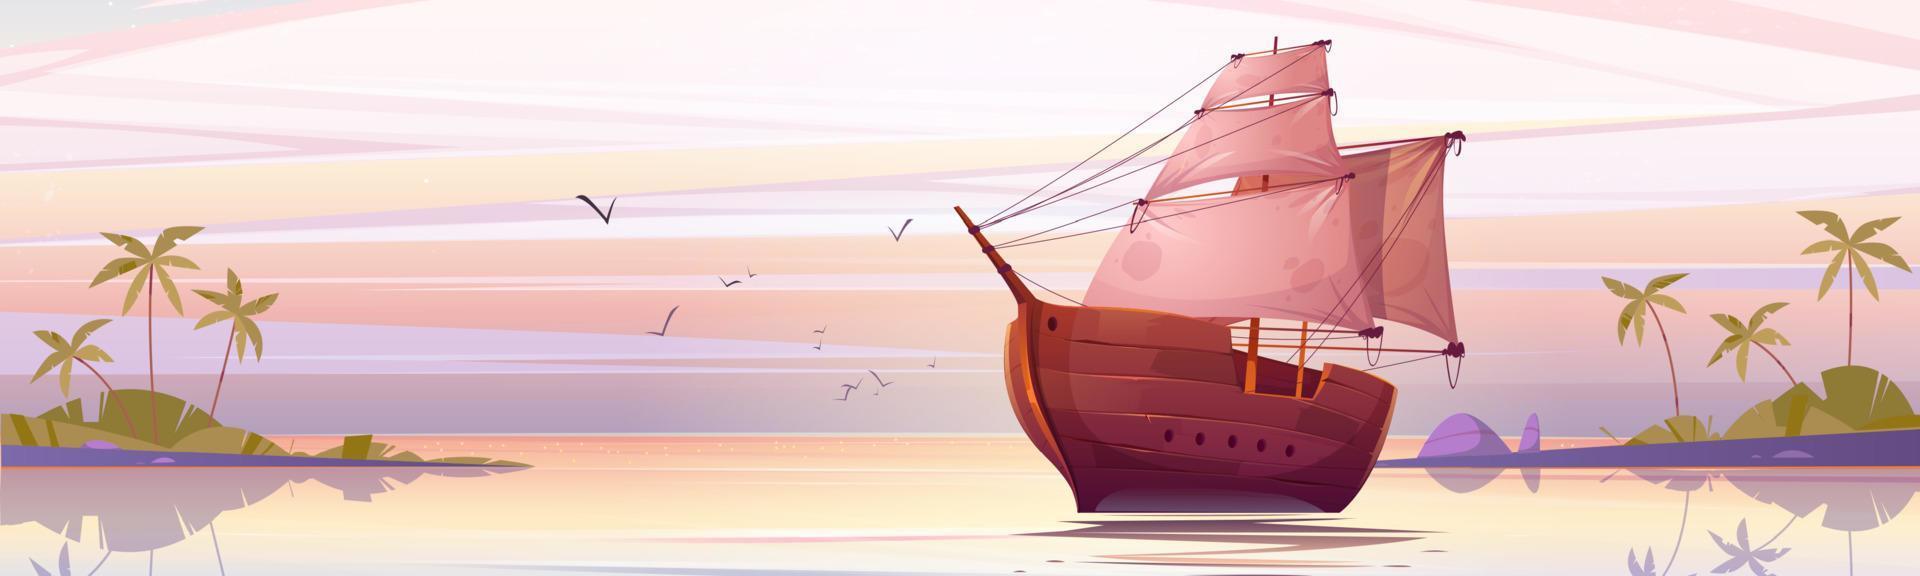 barco de madera con velas blancas flotando bajo un cielo rosa vector